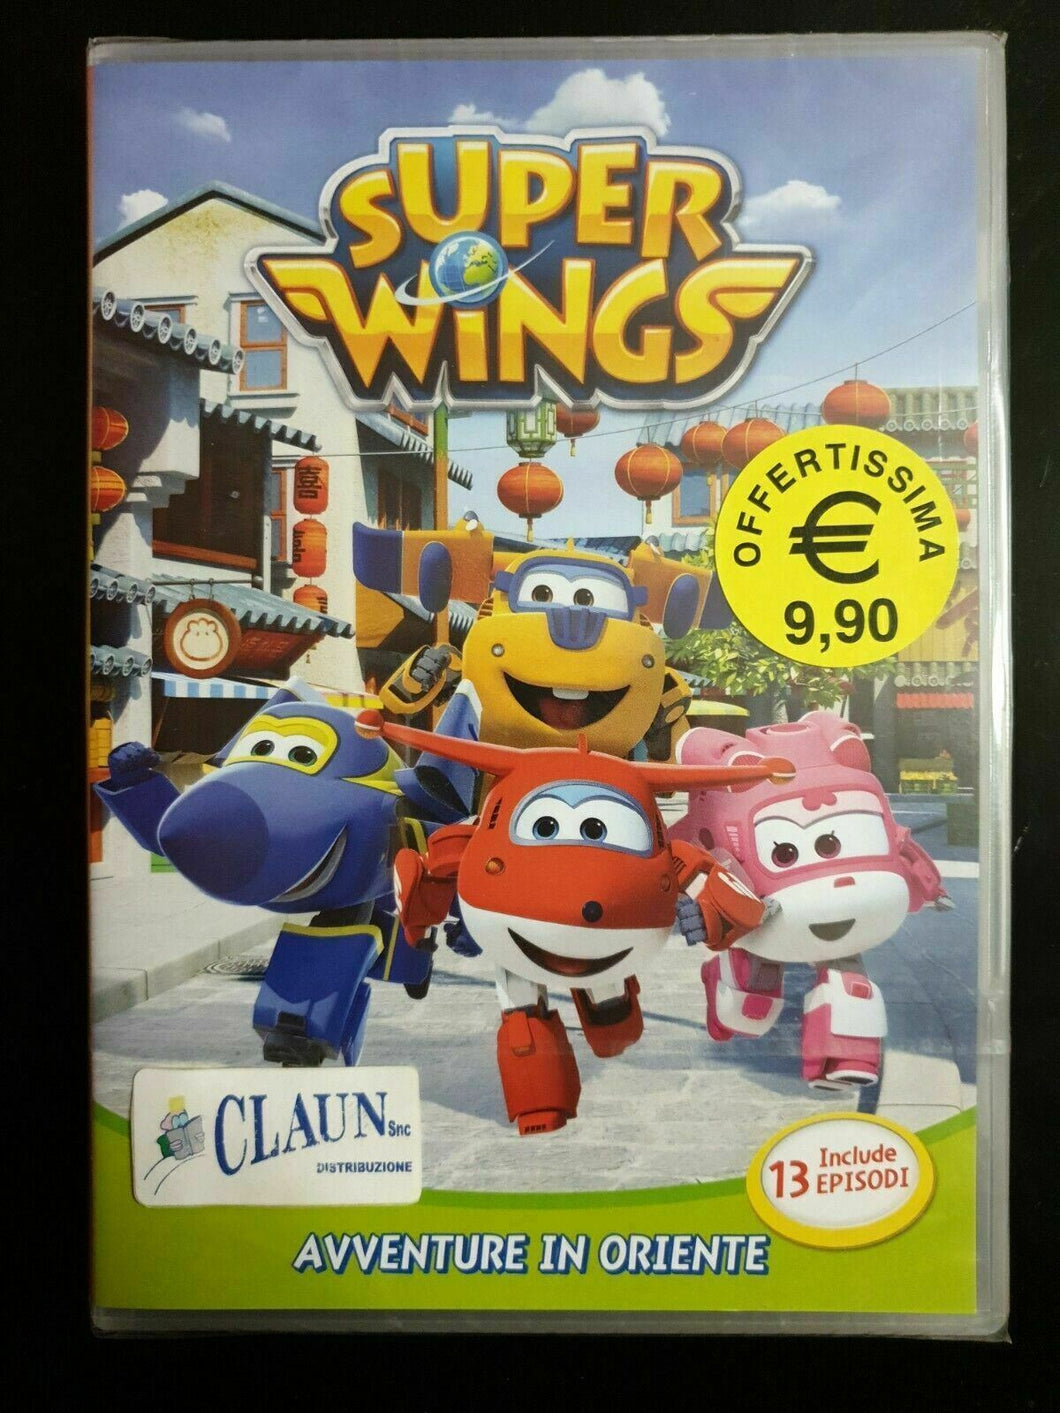 Super Wings Vol 2  Avventure in oriente - DVD Nuovo